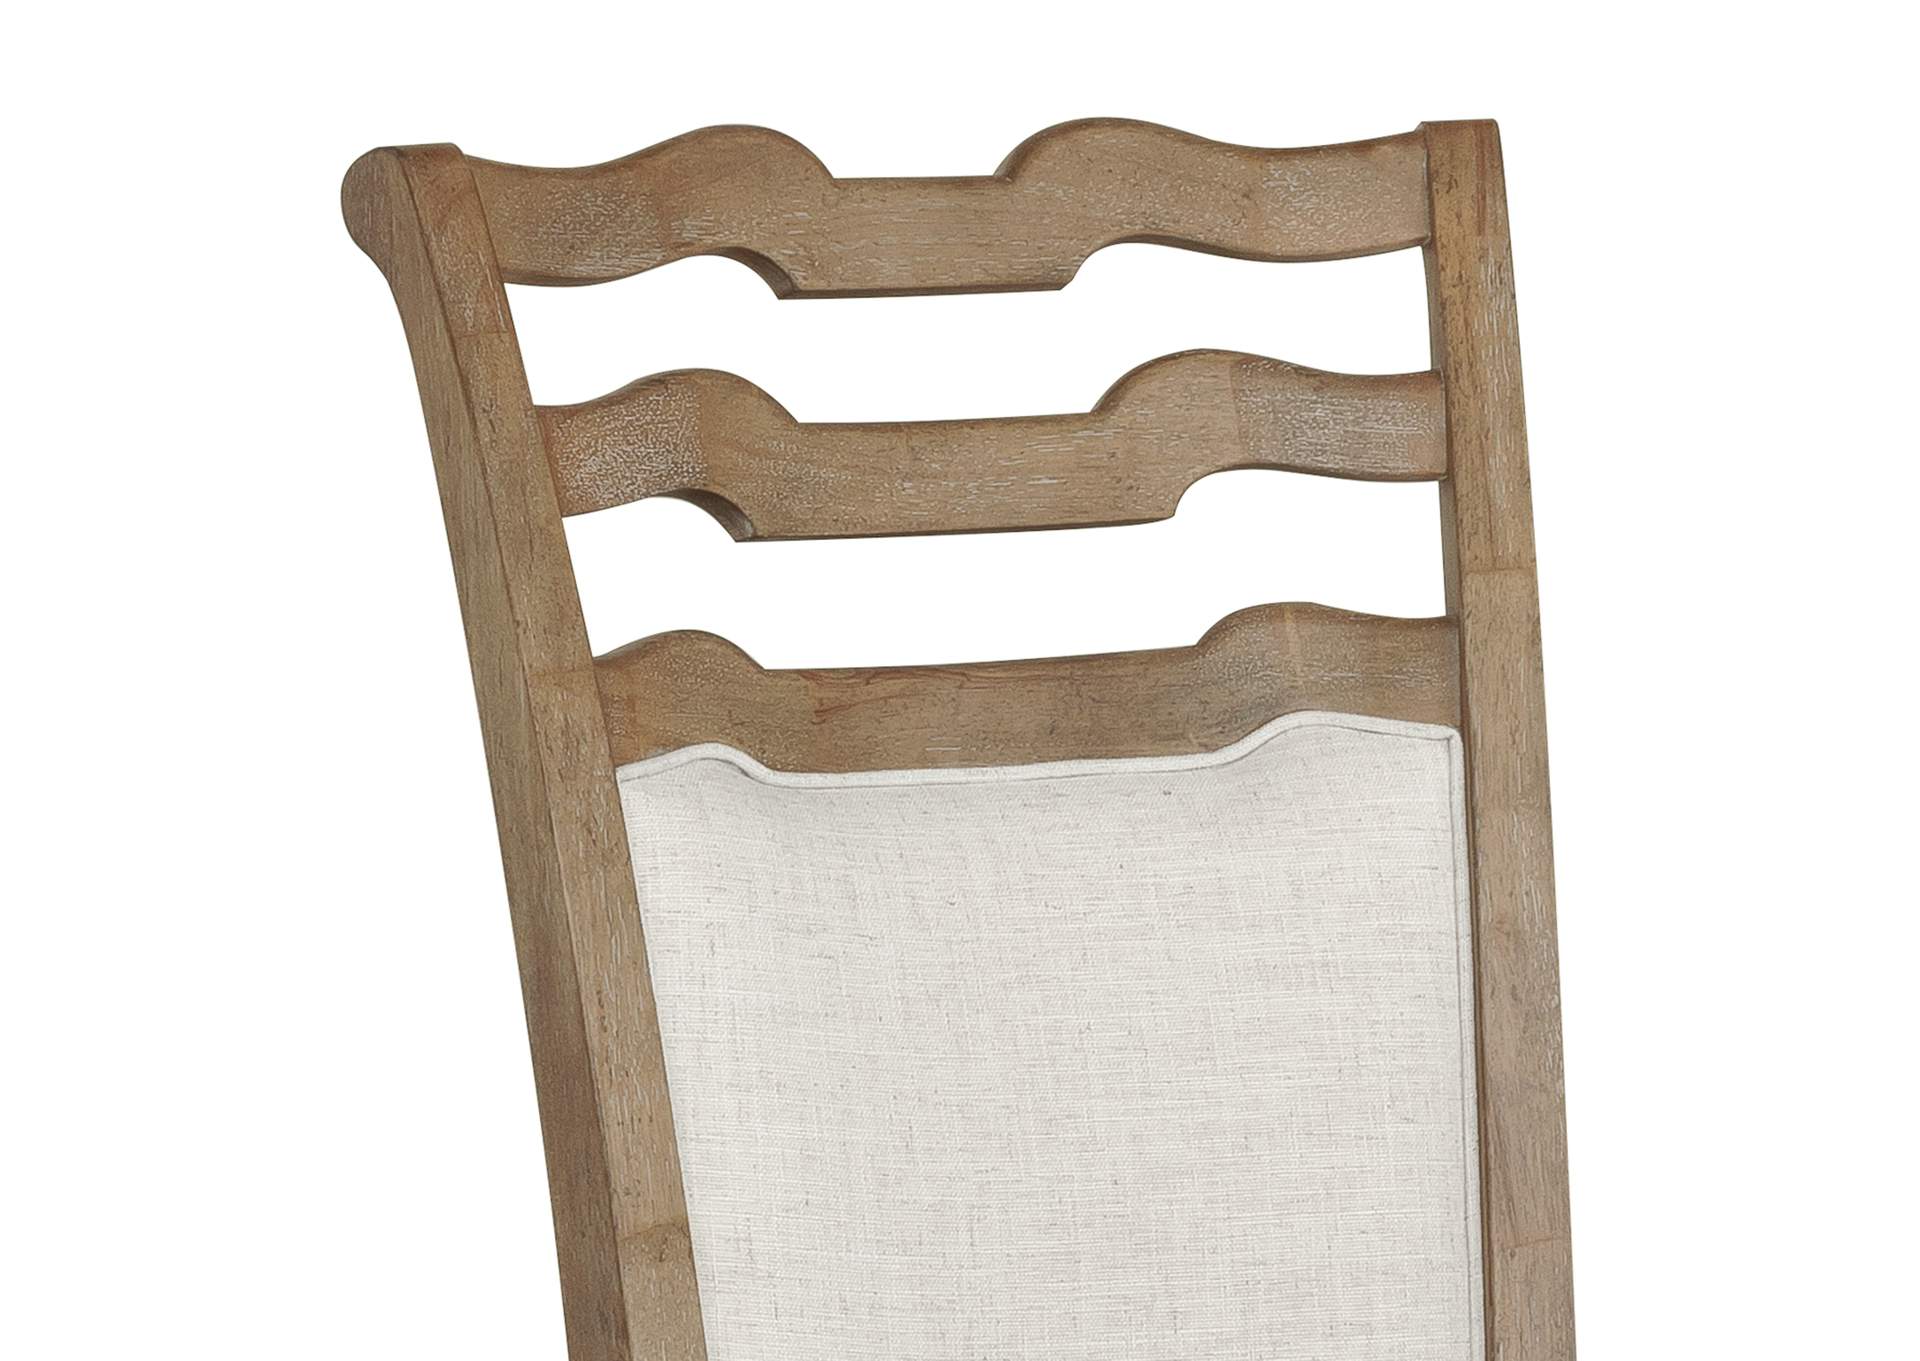 Weston Hills Upholstered Side Chair,Pulaski Furniture